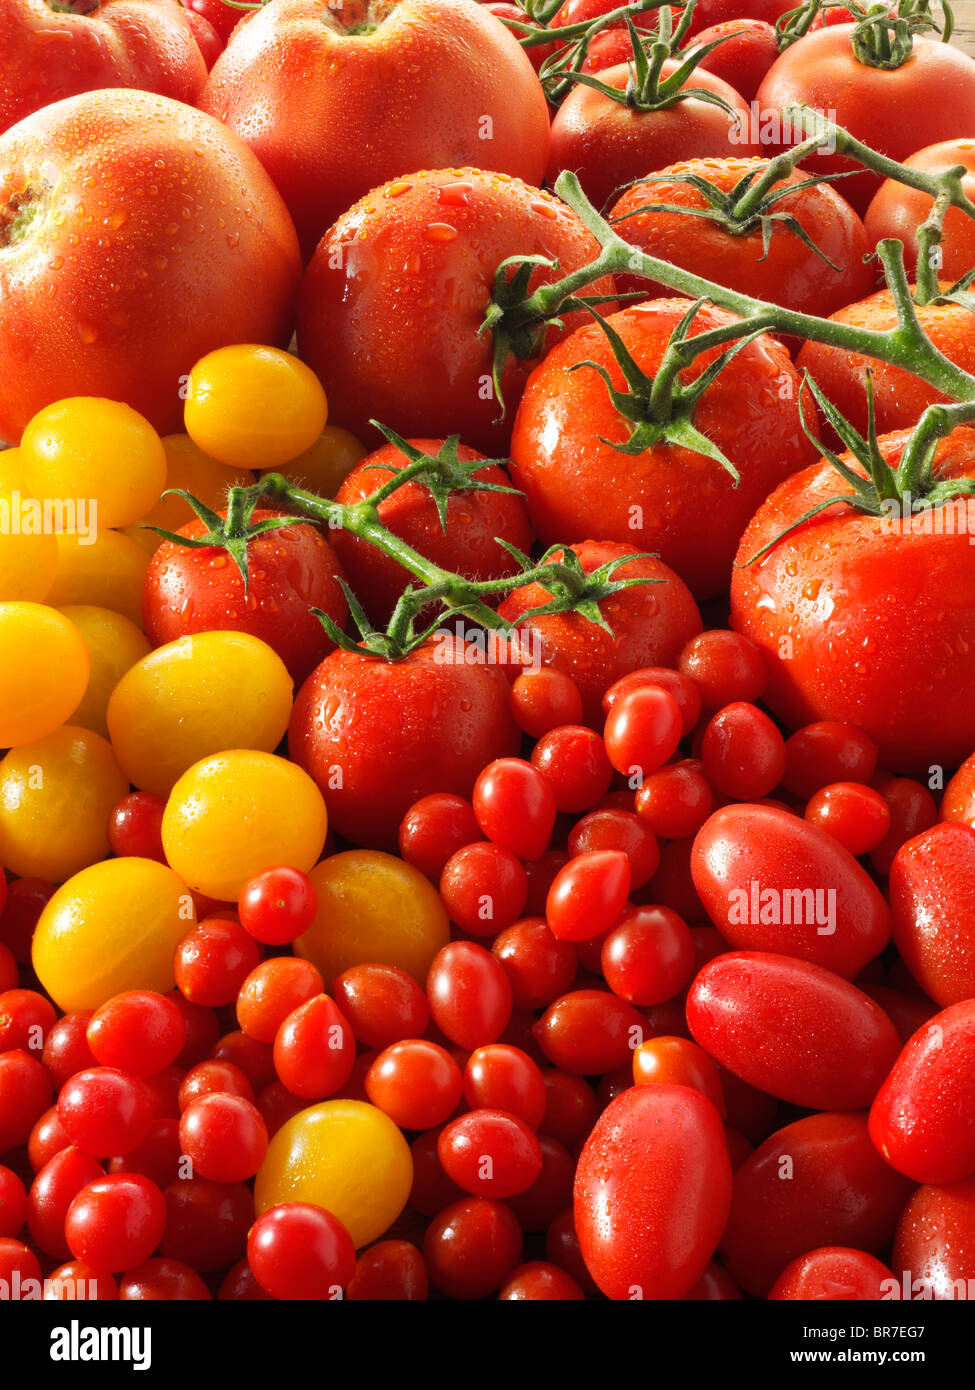 mixed yellow & red vine tomatoes Stock Photo